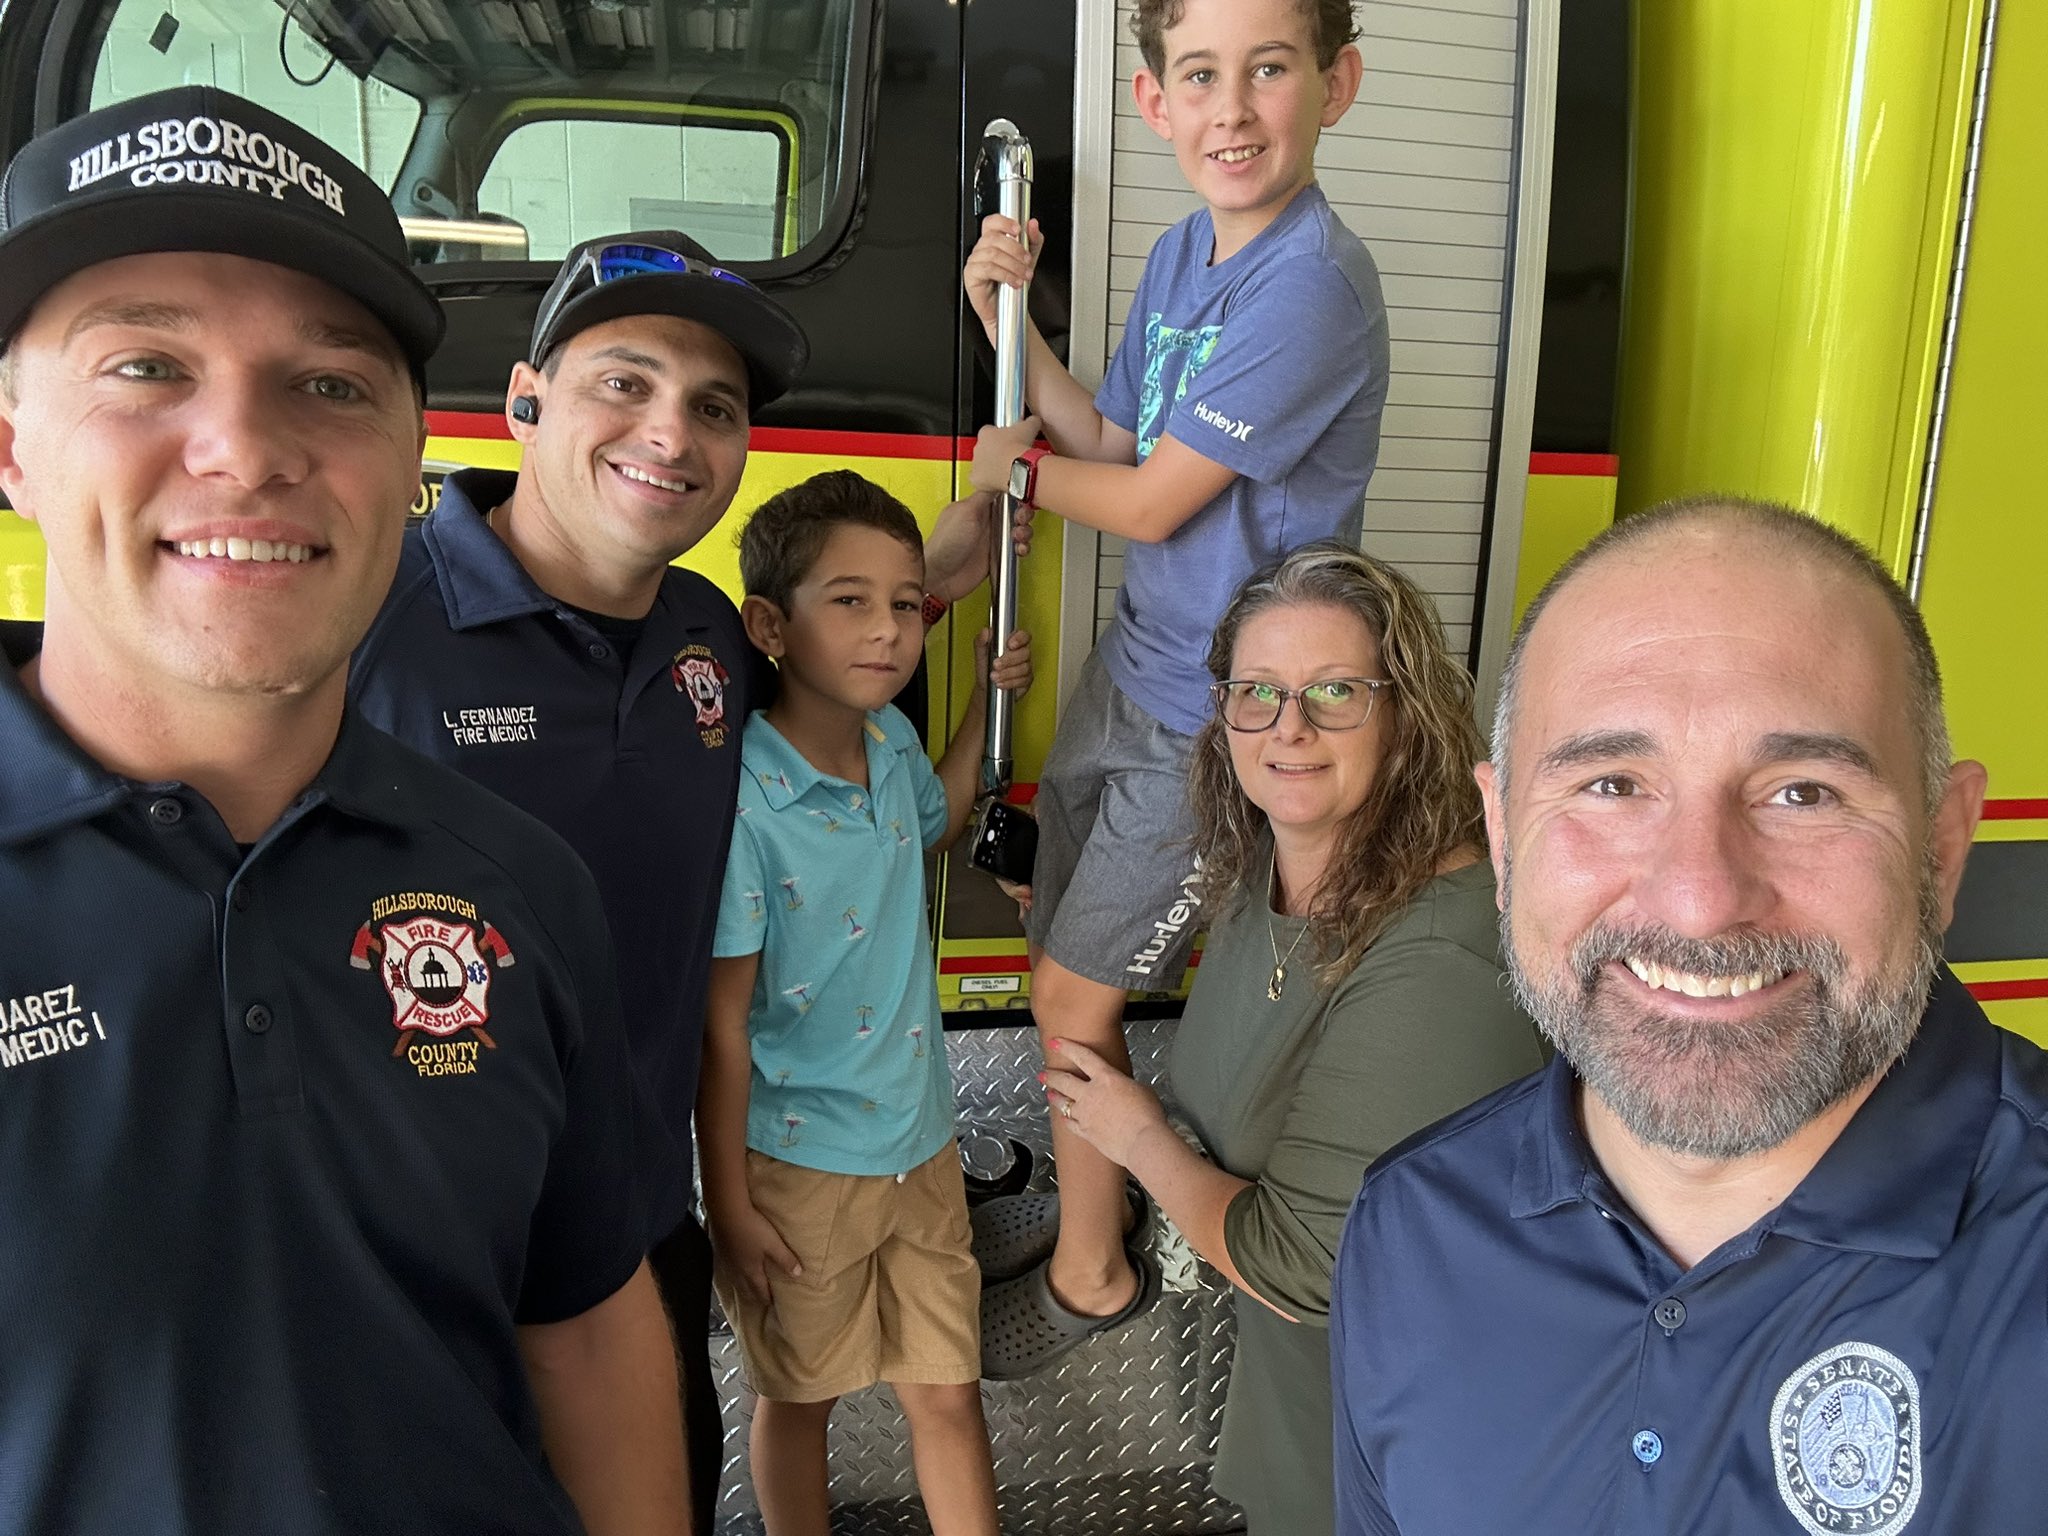 Hillsborough County Fire Rescue (@HillsFireRescue) / X